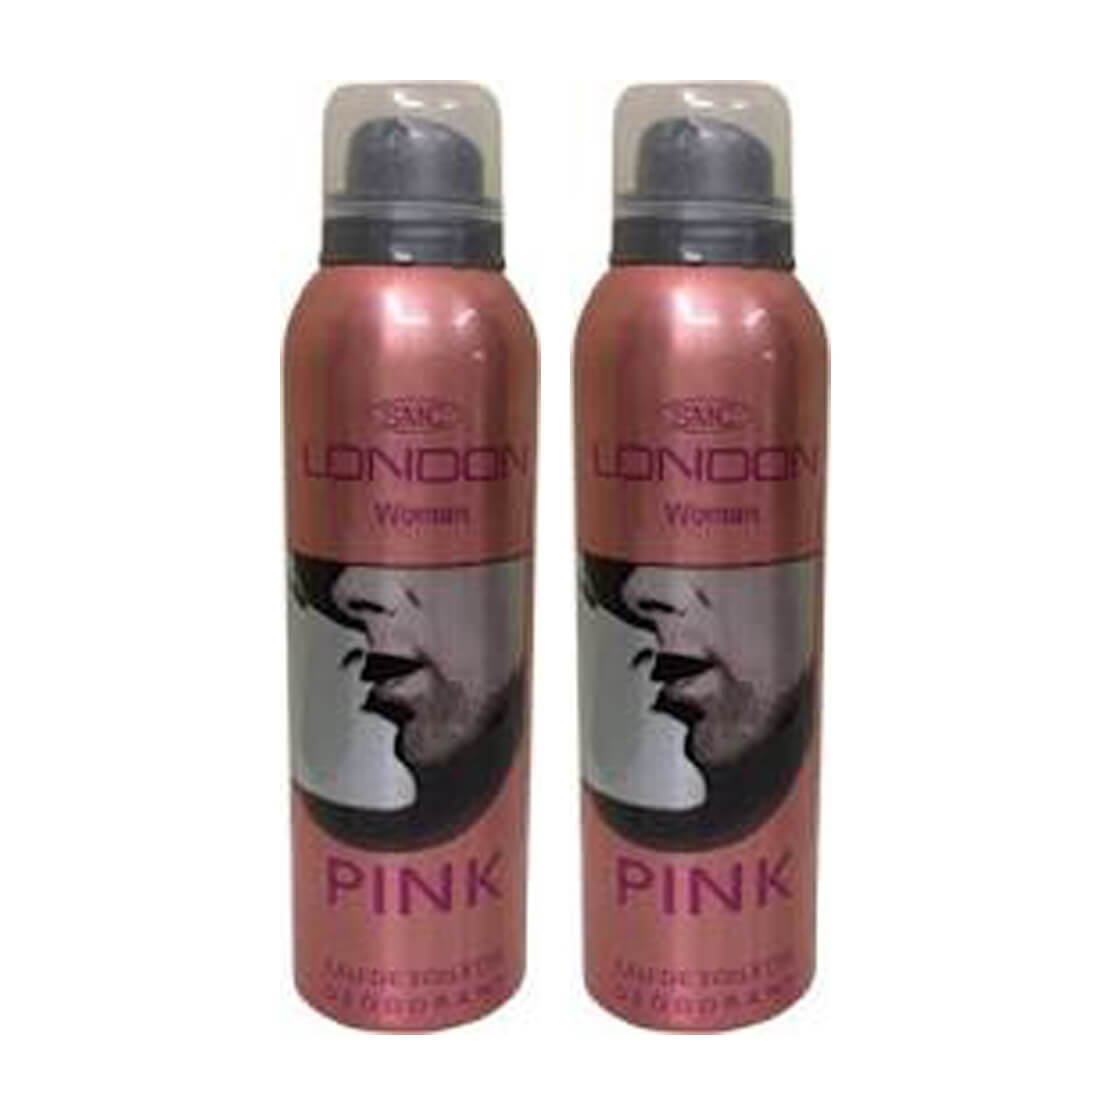 London Pink Deodorant Body Spray Pack of 2 x 200ml